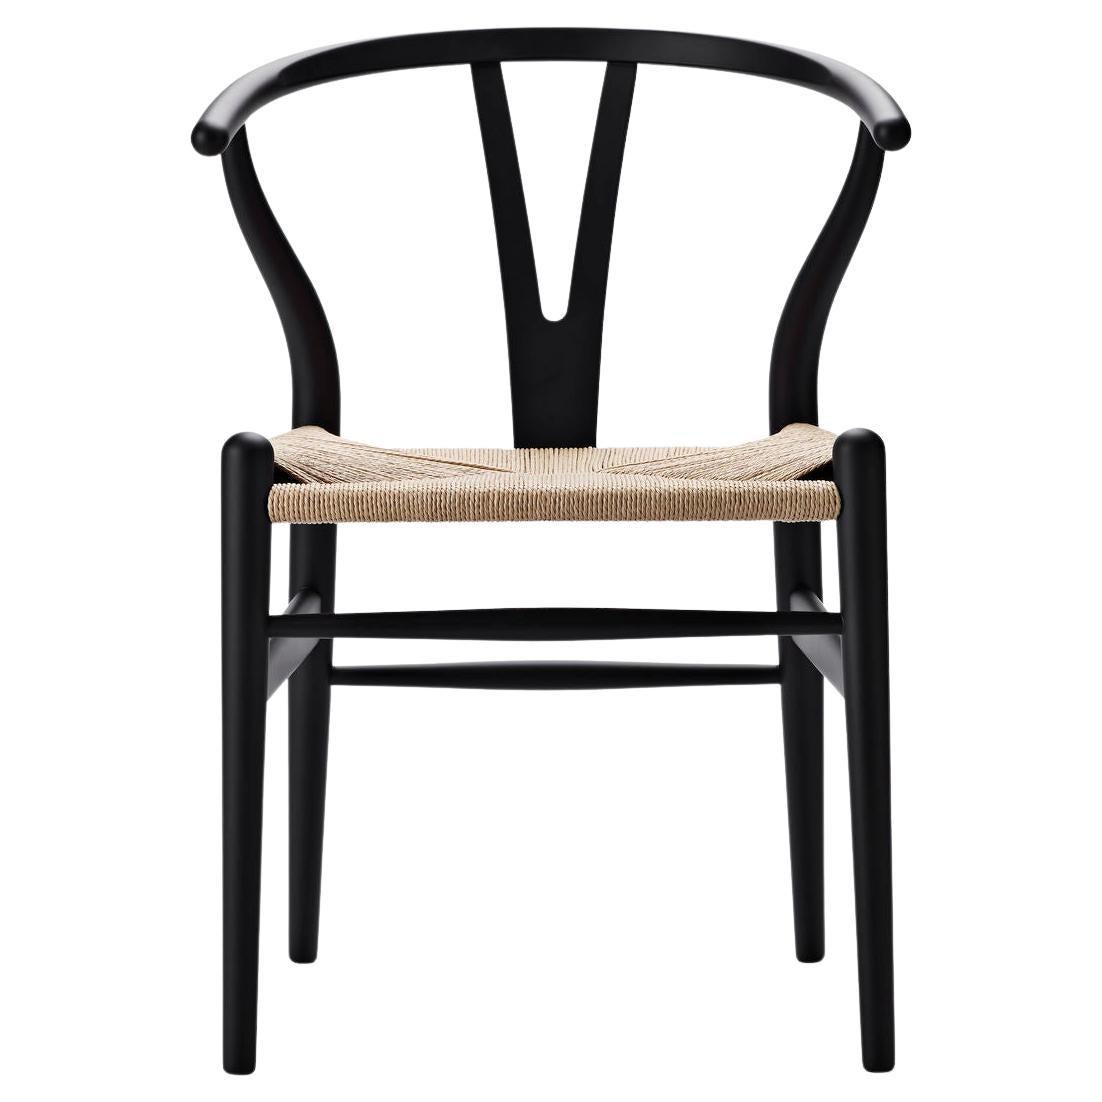 Carl Hansen CH24 Wishbone Chair, Soft Colors, by Hans J. Wegner